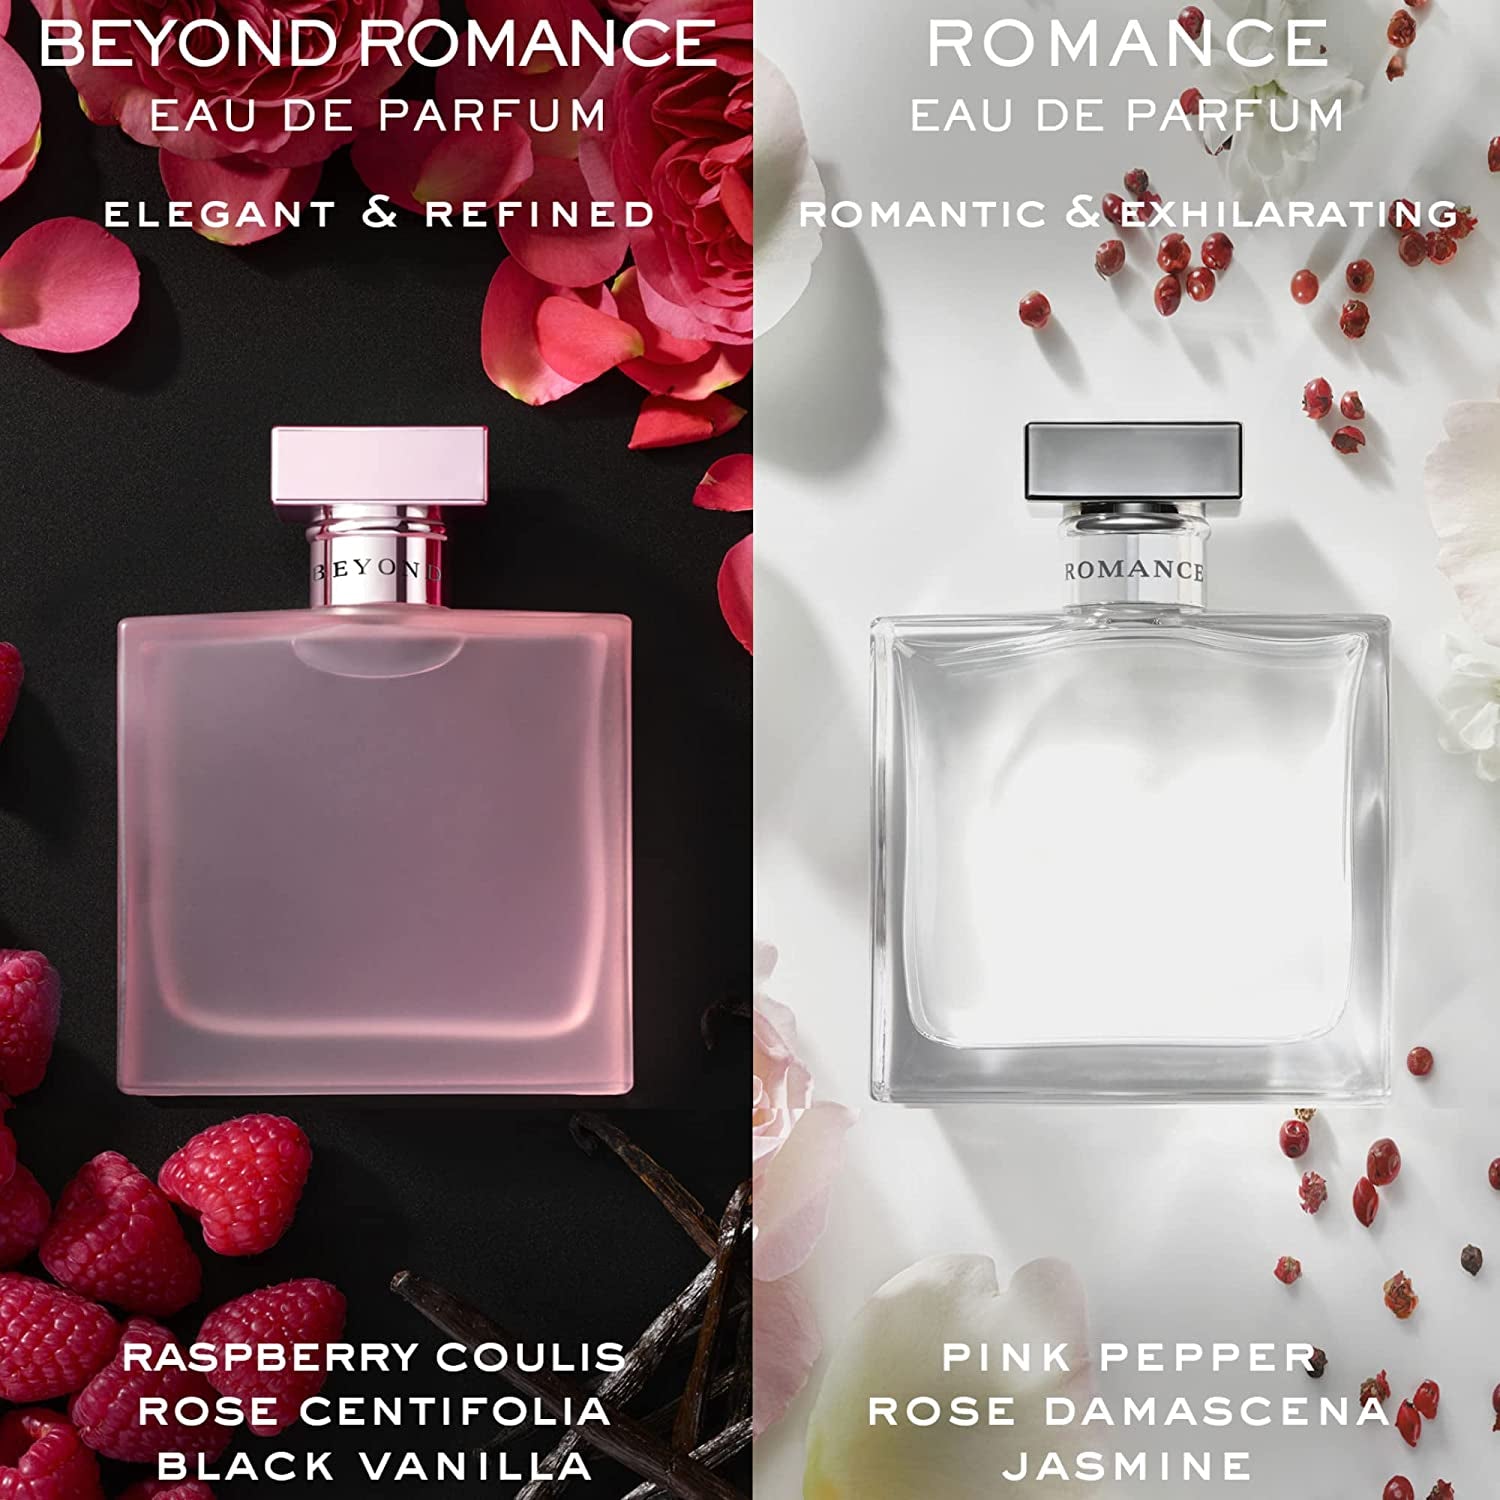 - beyond Romance - Eau De Parfum - Women'S Perfume - Ambery & Floral - with Rose, Black Vanilla, and Raspberry - Medium Intensity